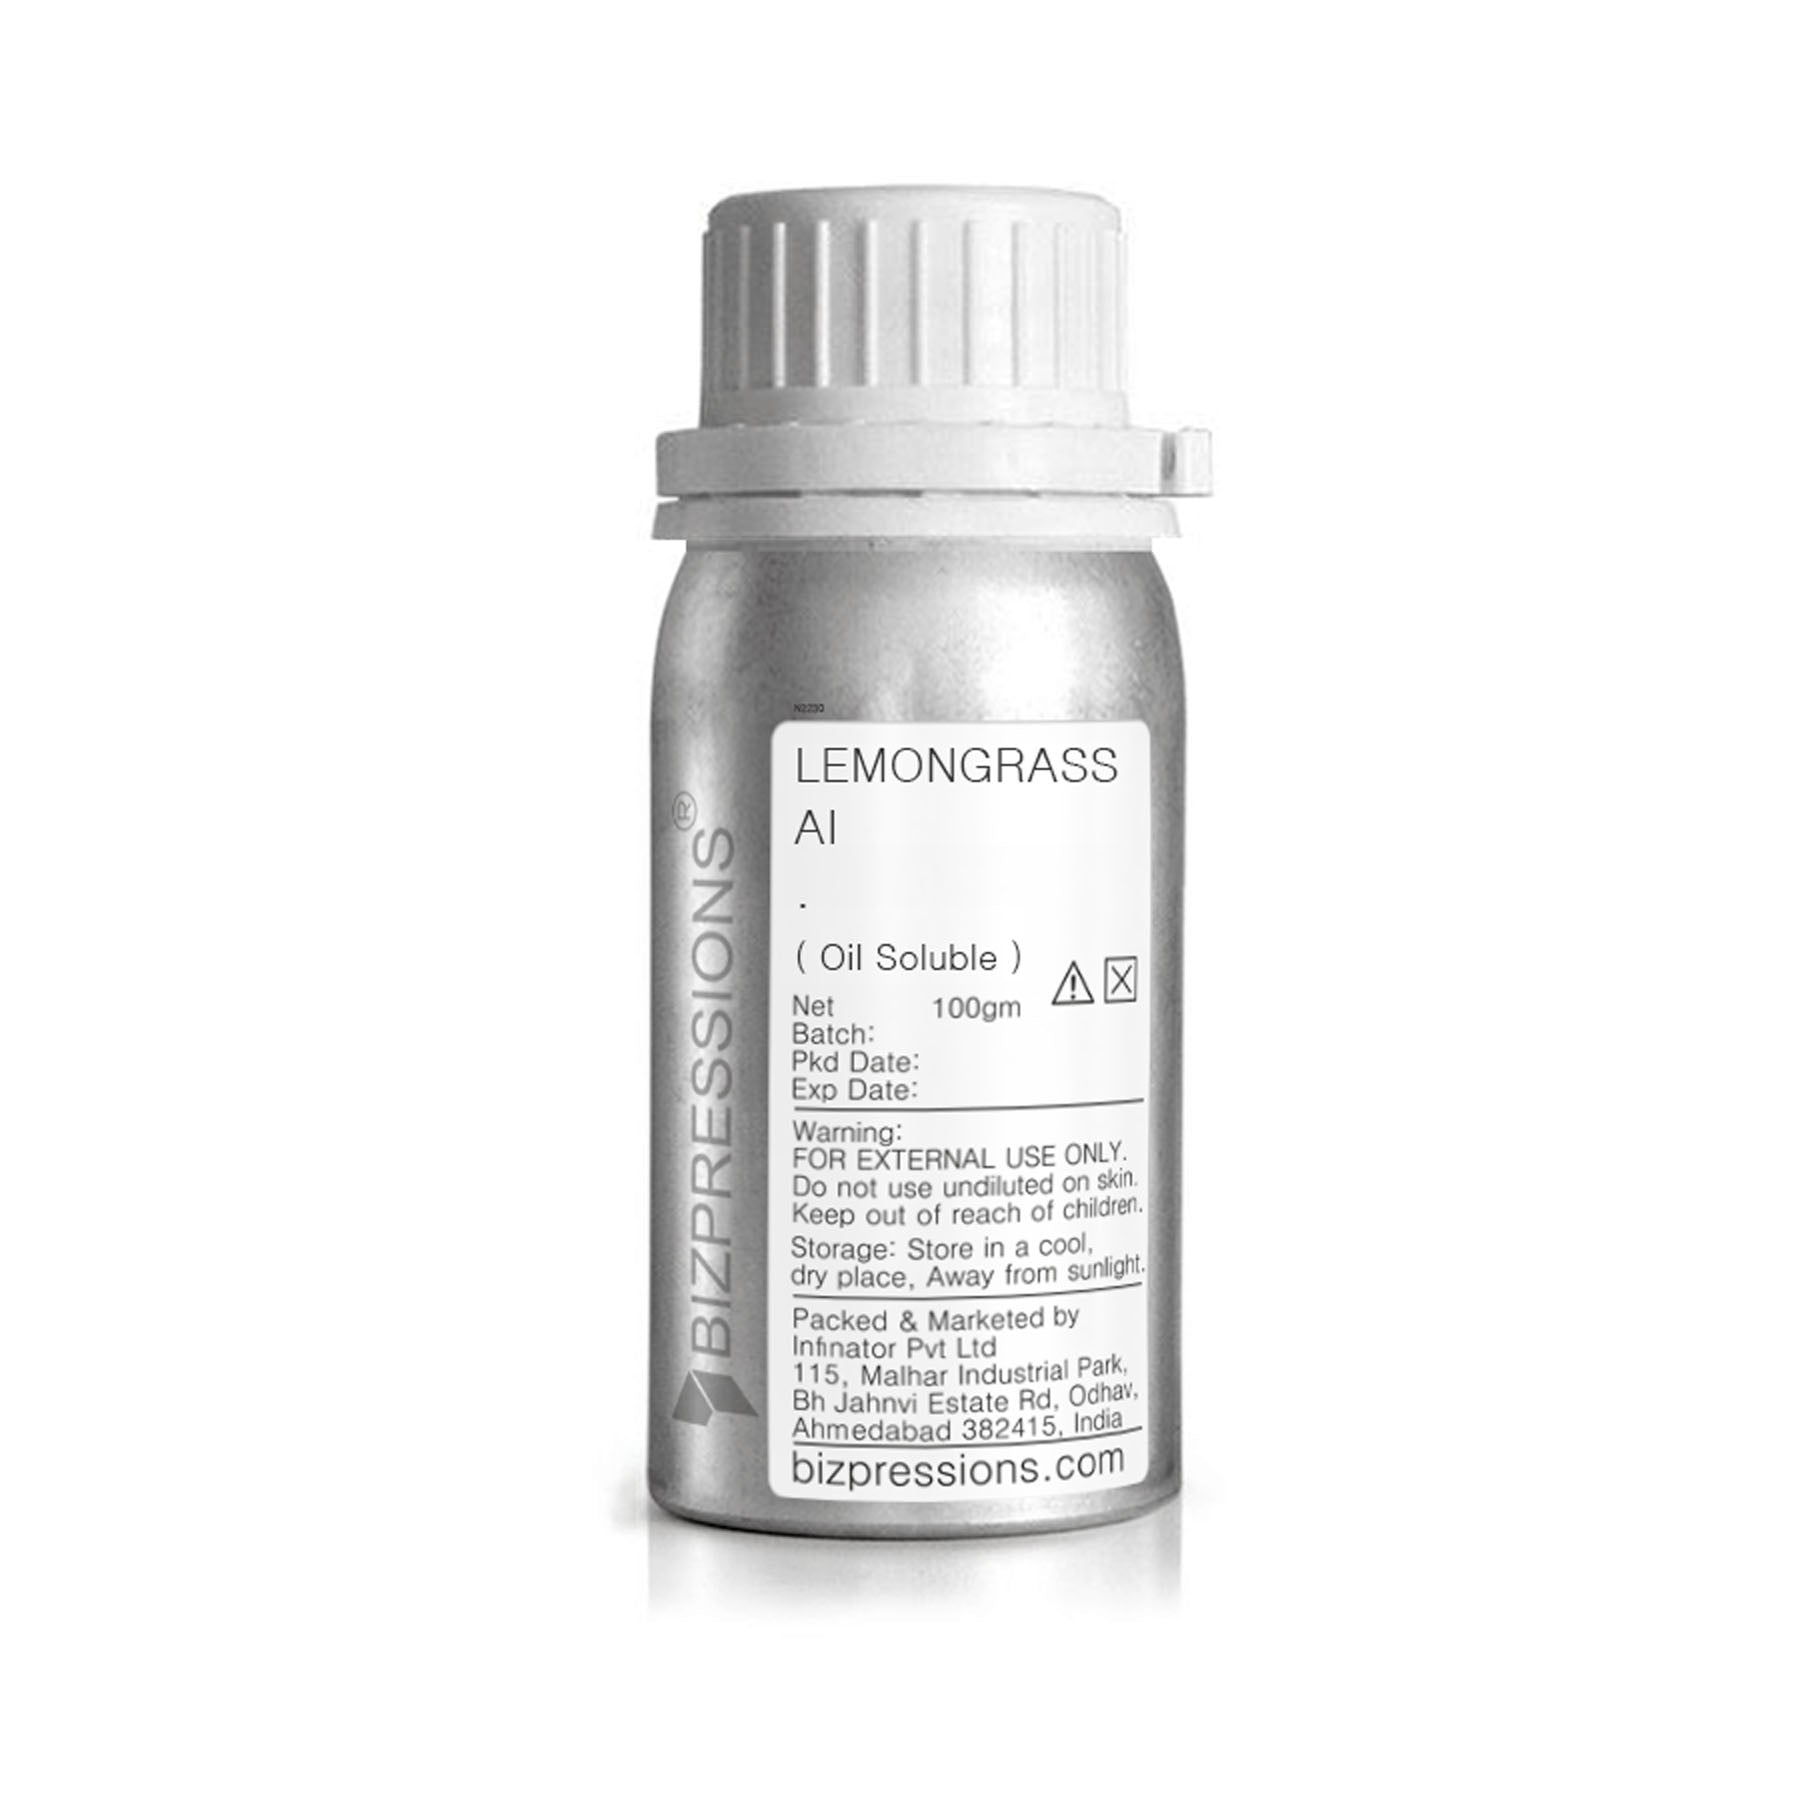 LEMONGRASS AI - Fragrance ( Oil Soluble ) - 100 gm